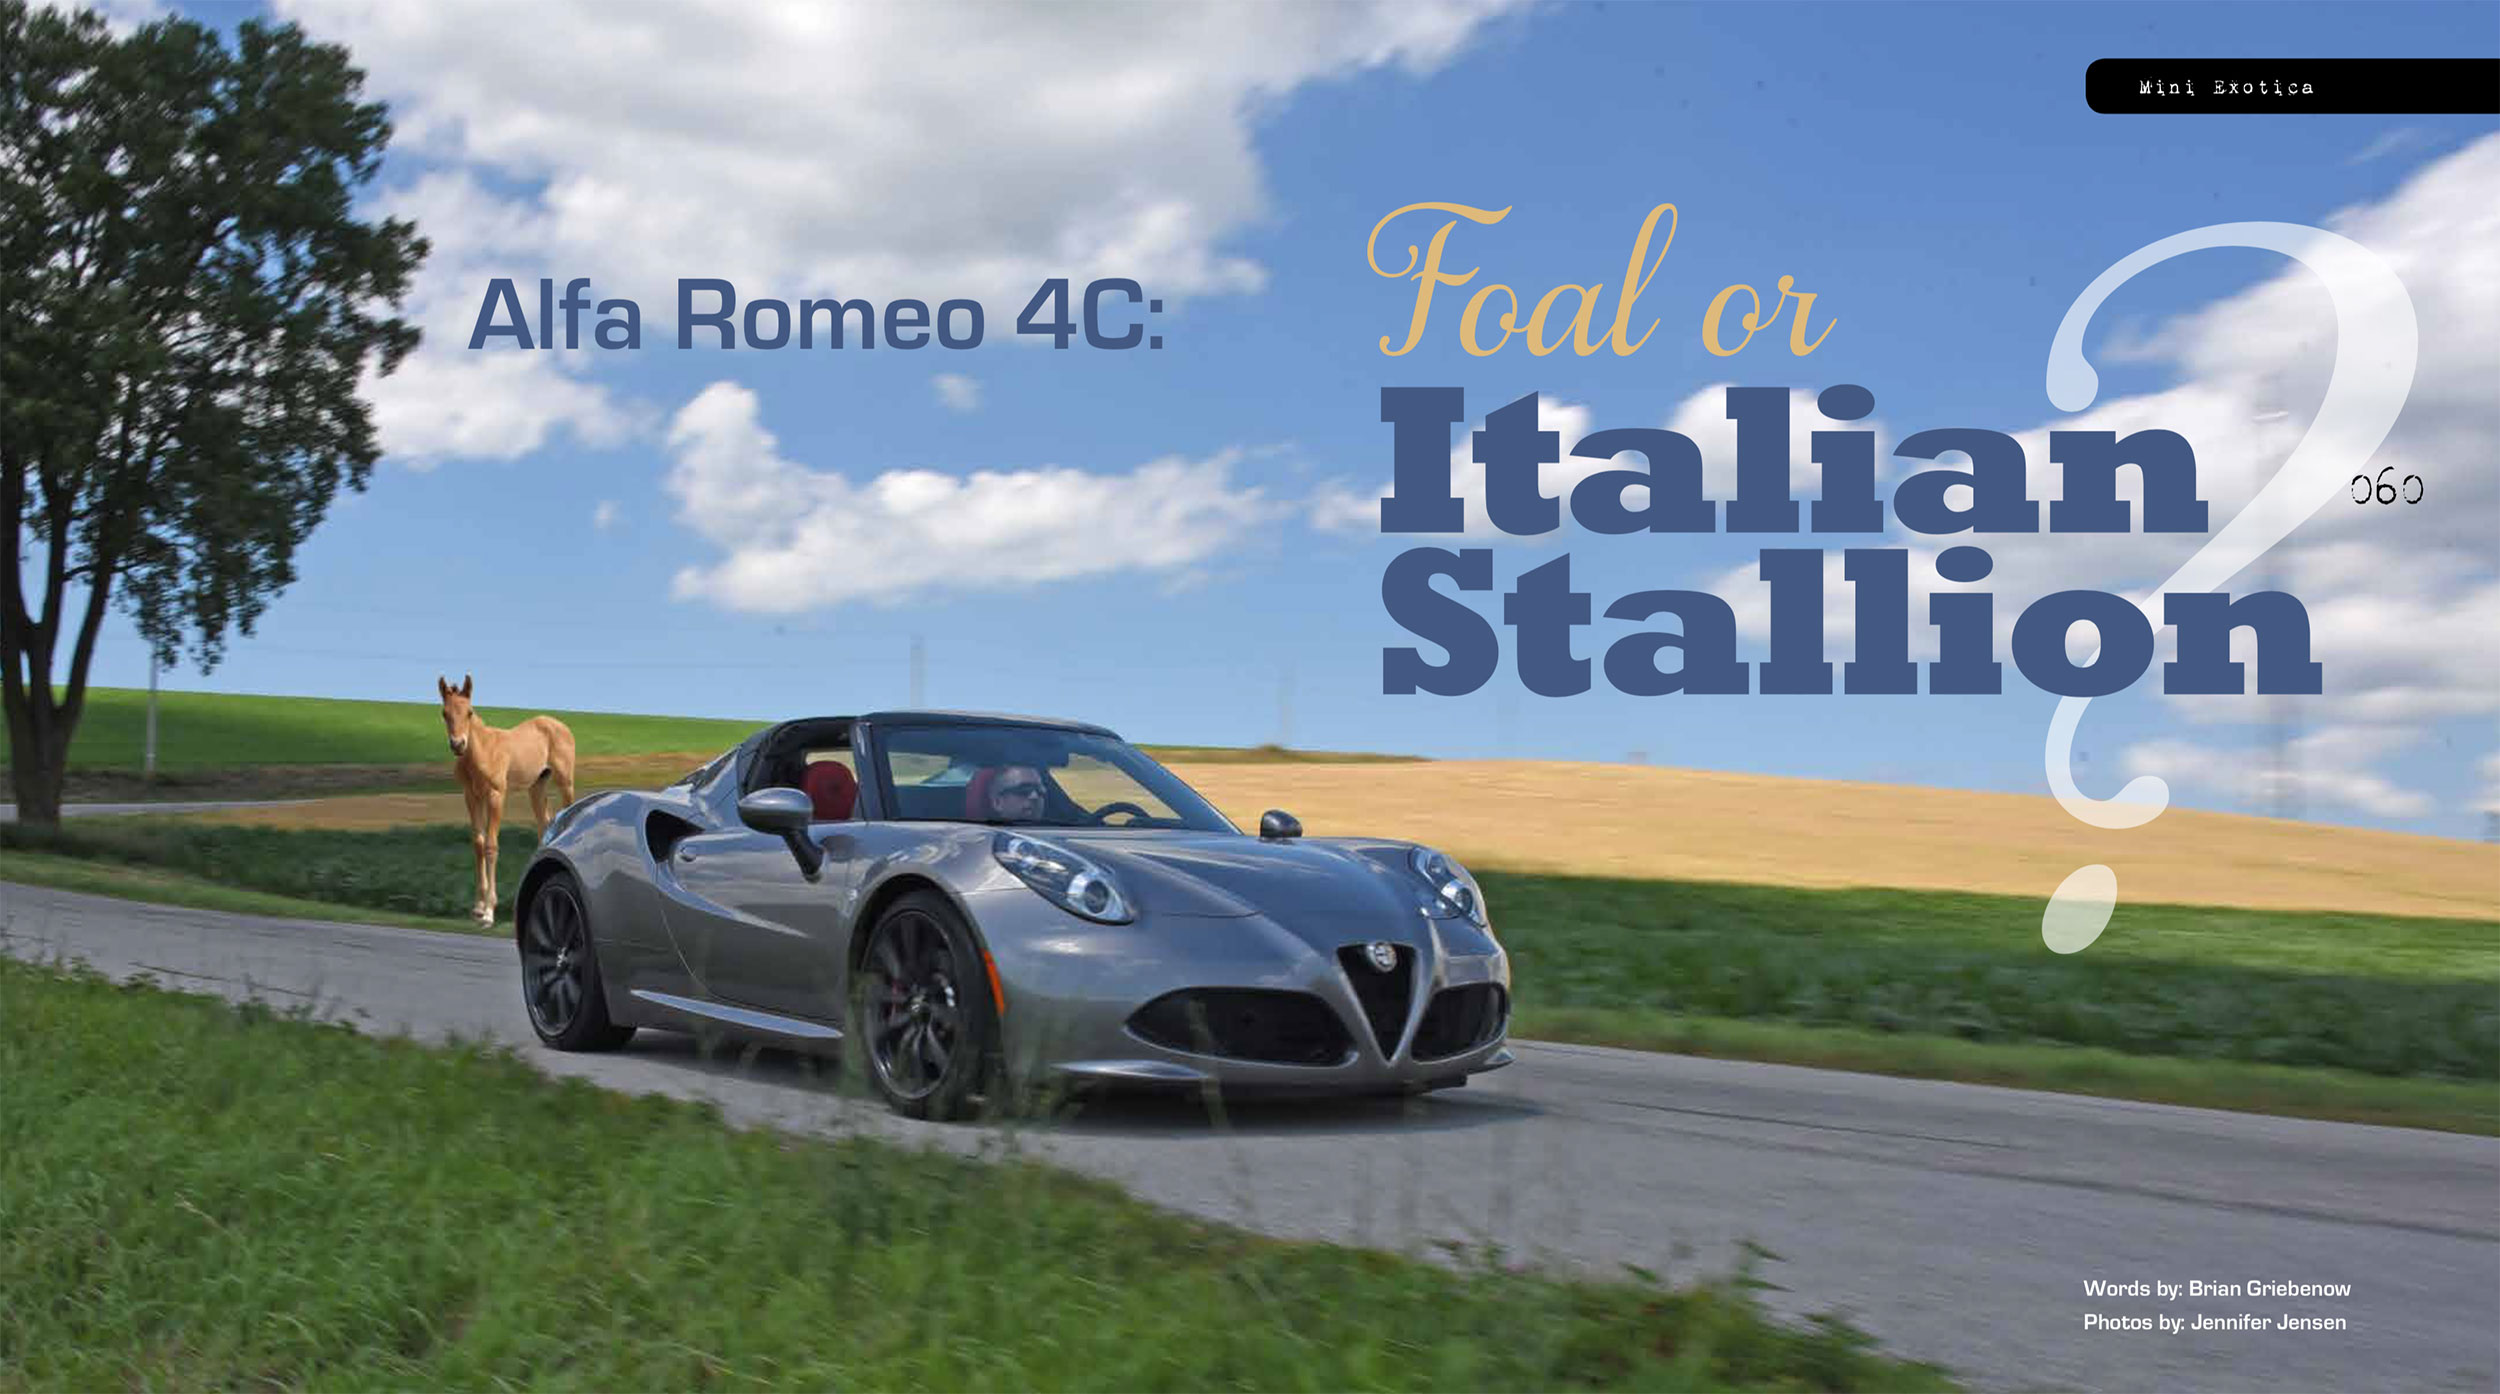 Foal or Italian Stallion – Alfa Romeo 4C as seen in issue 2016-03